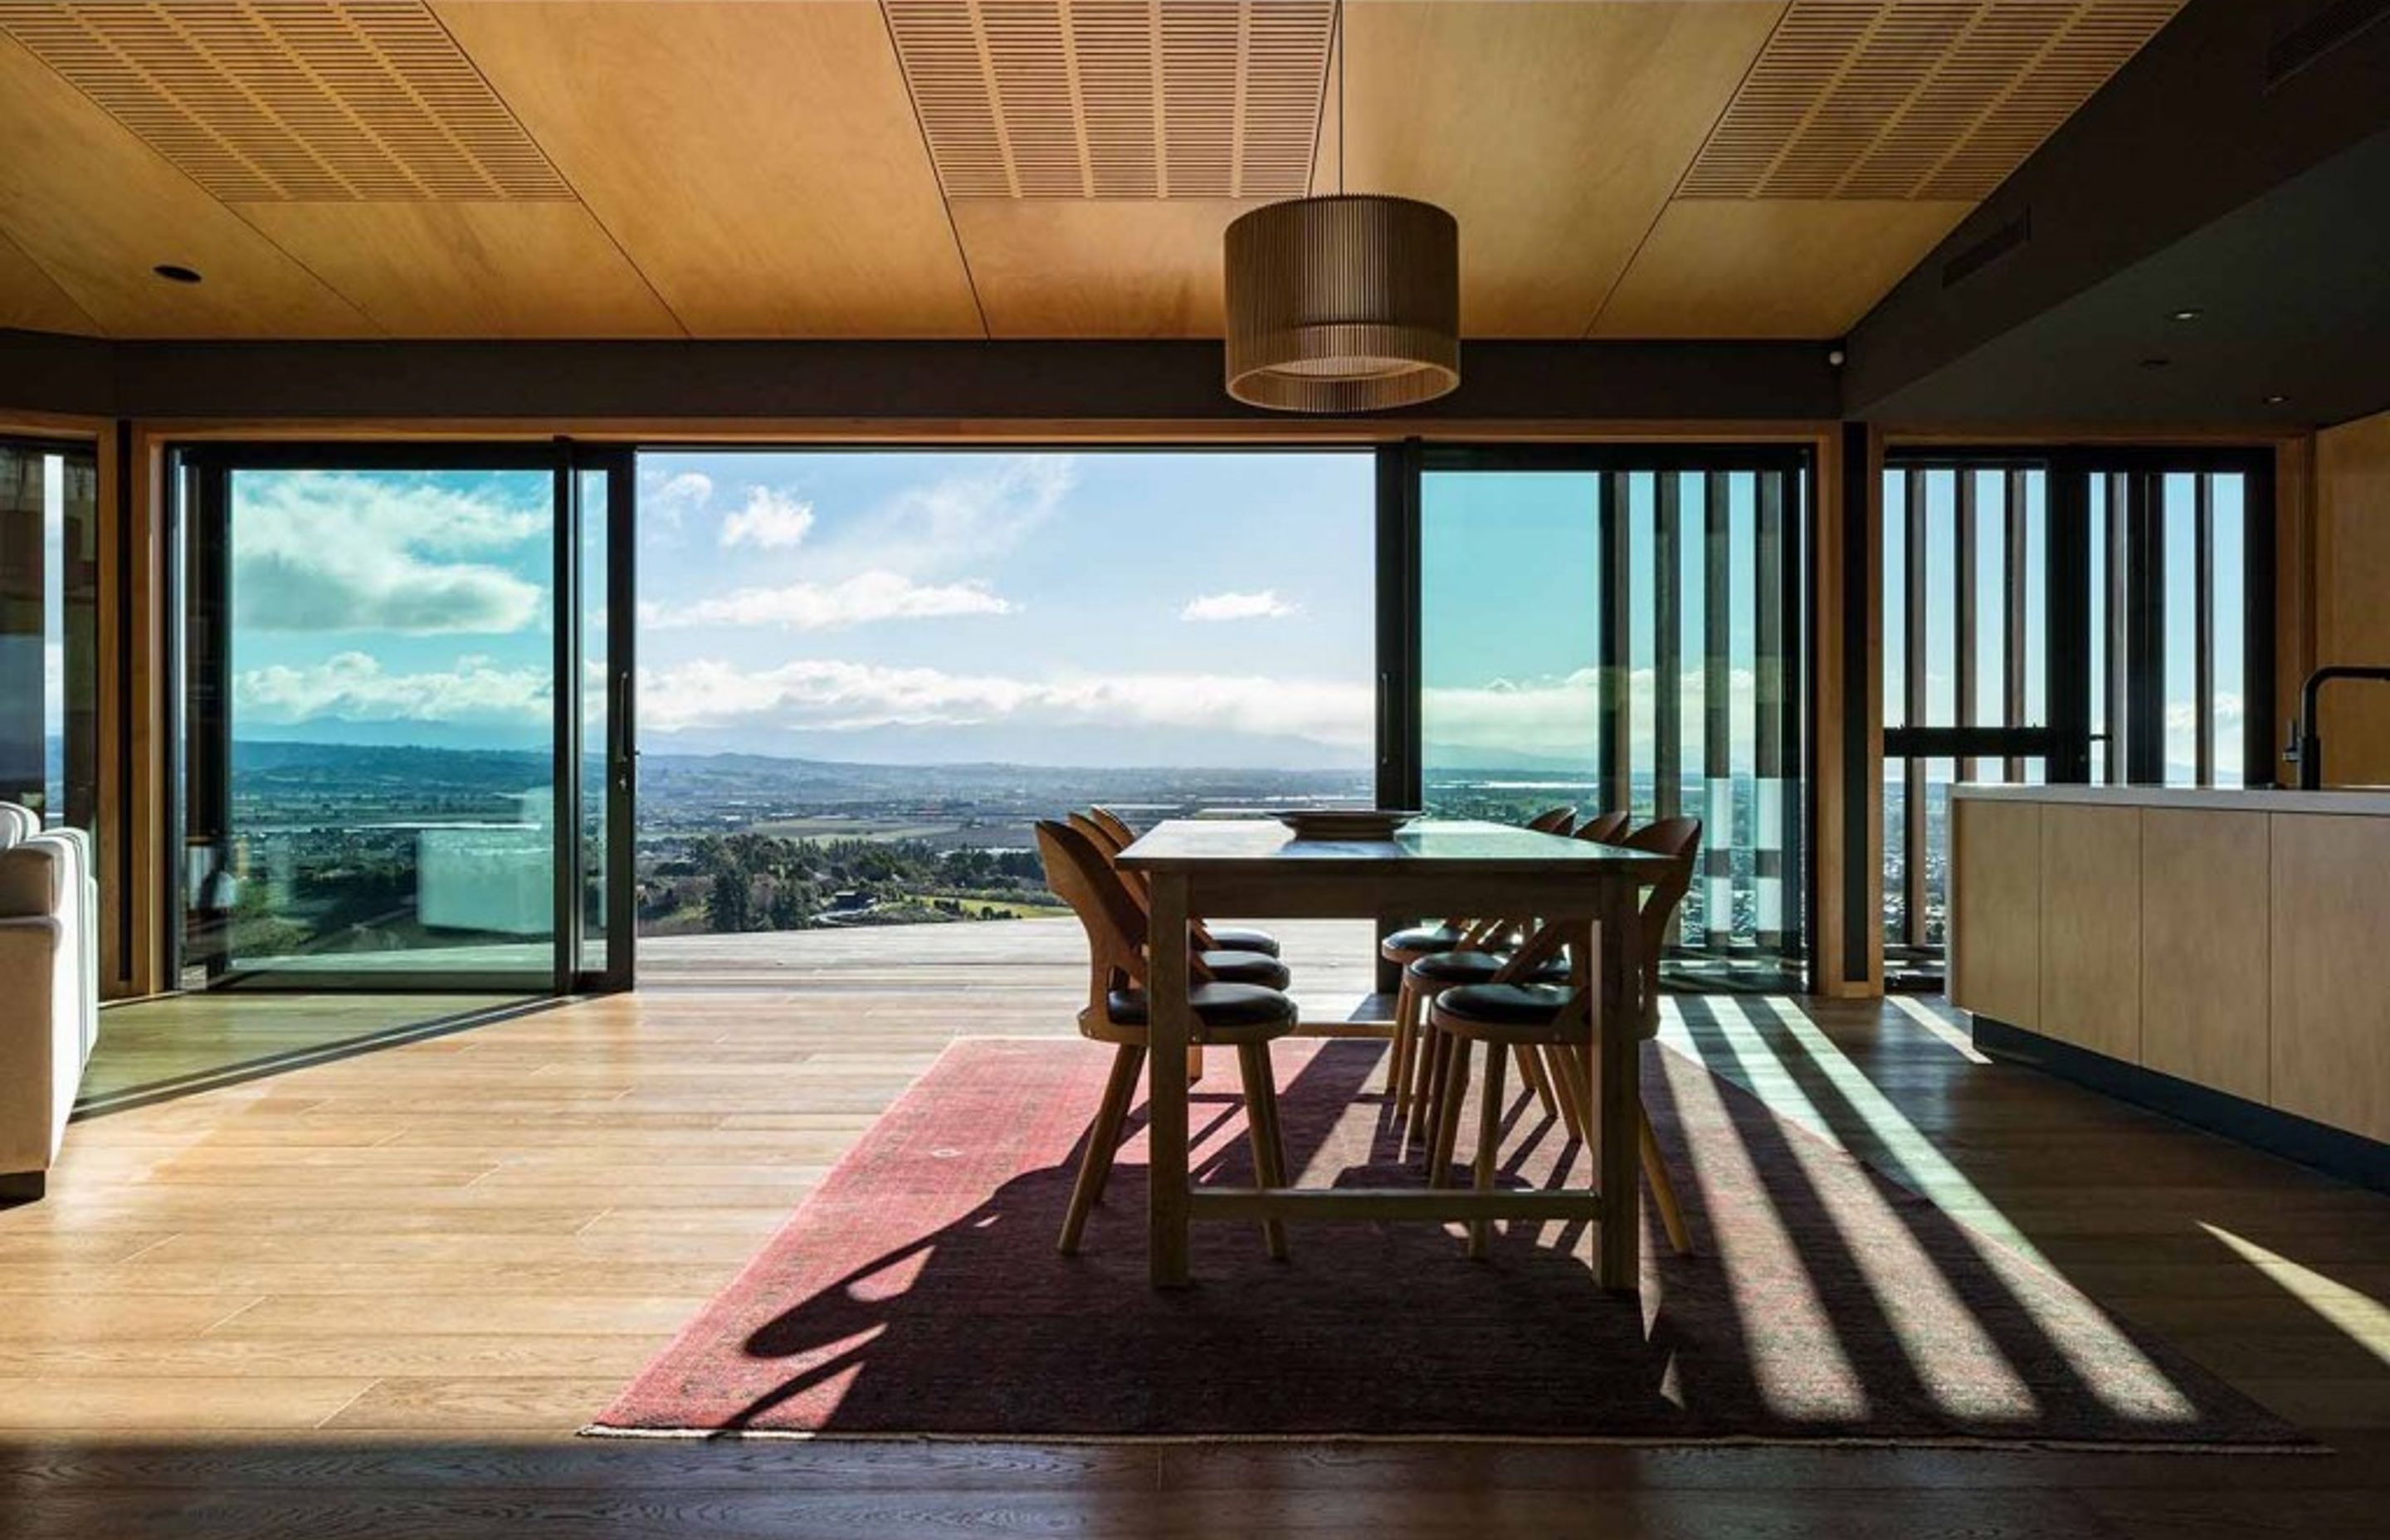 The Euroslider Bi-parting Sliding Door features in Tasman View House, winner of the 2018 NZIA Nelson/Marlborough Architecture Awards.